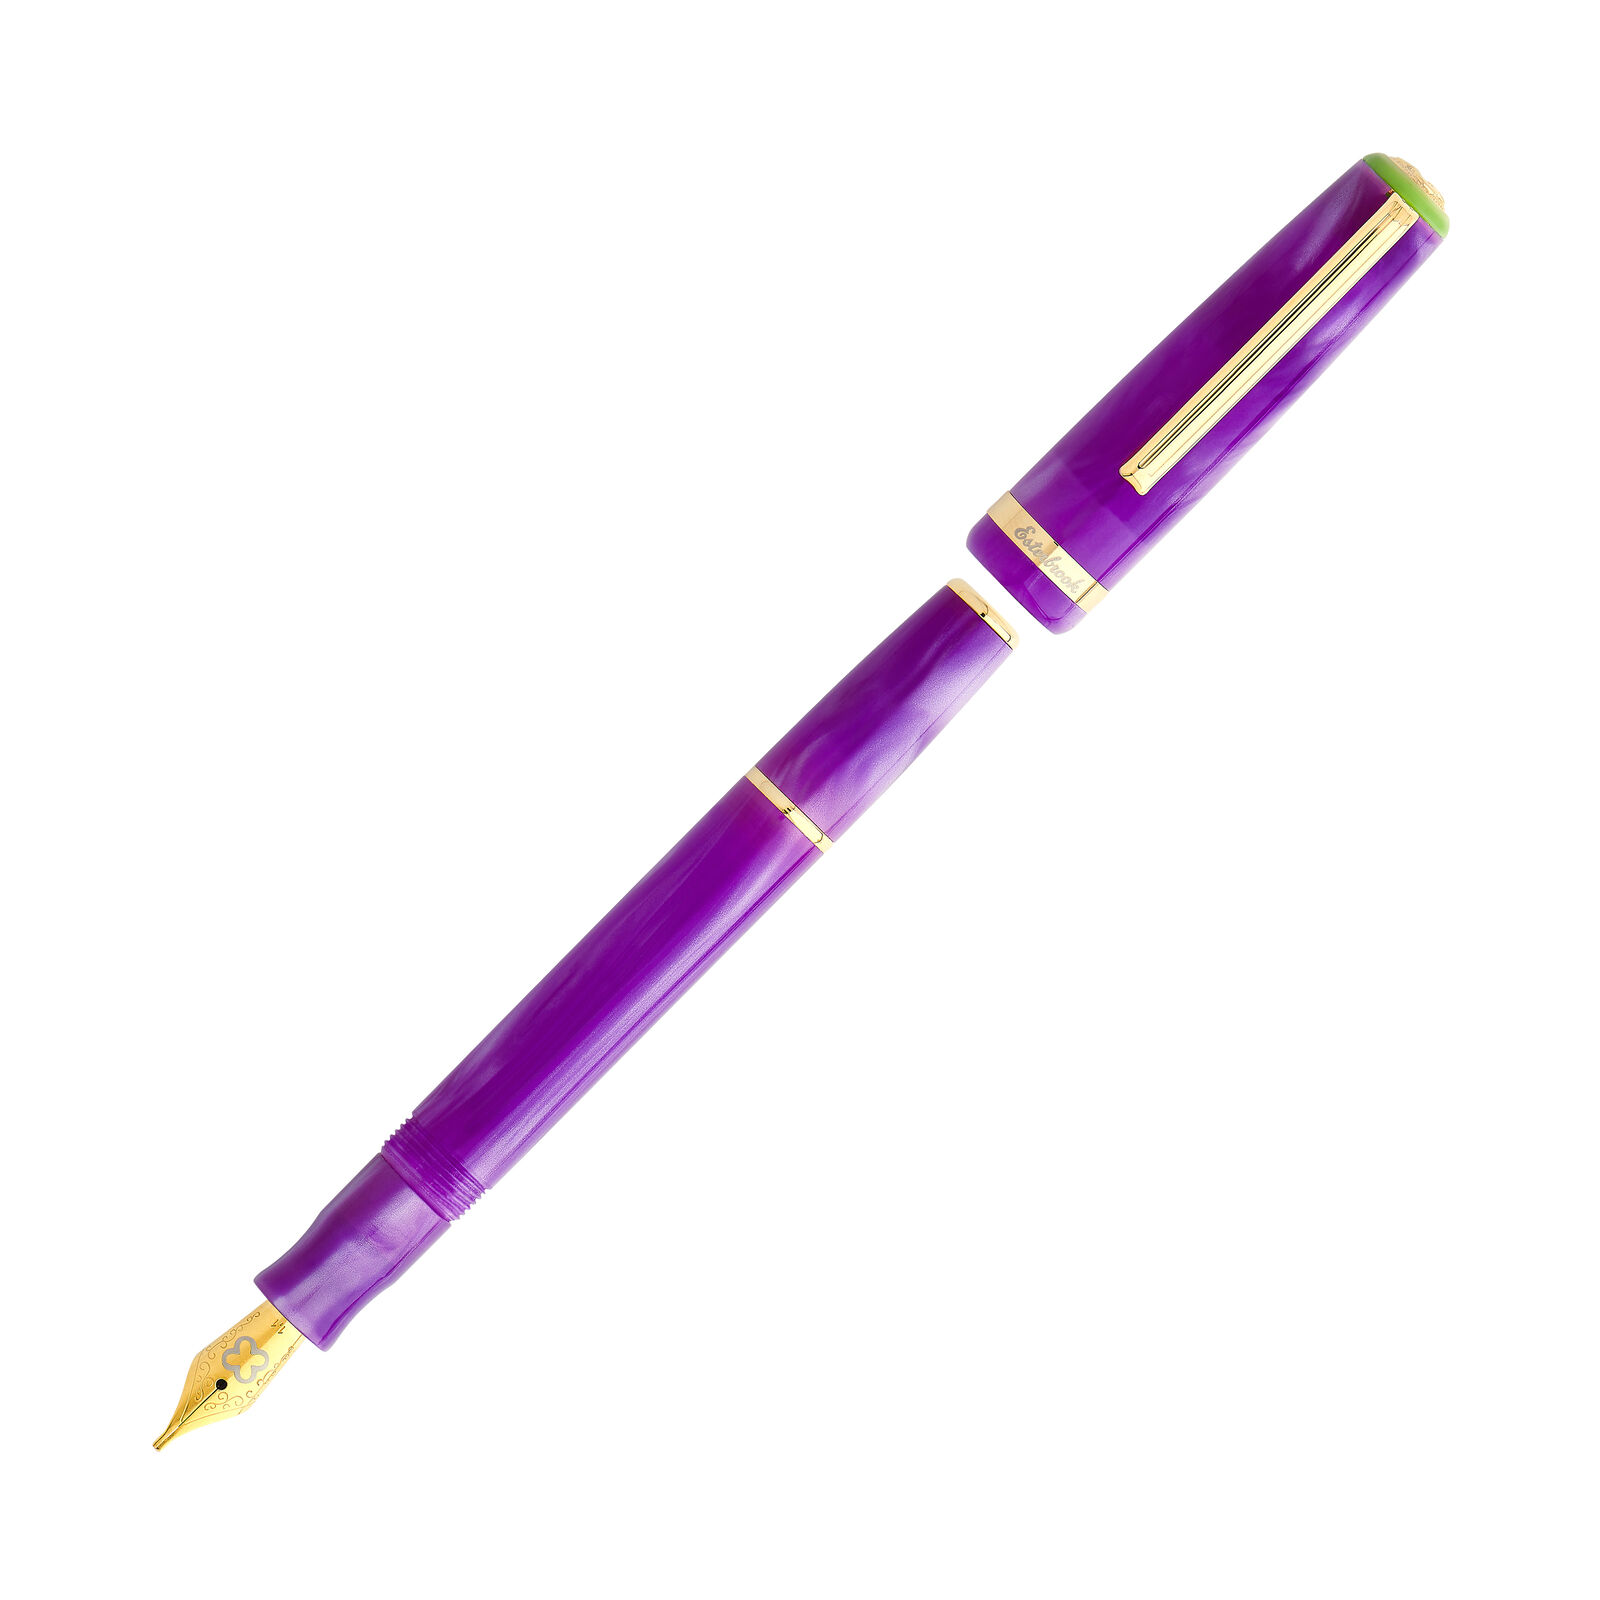 Esterbrook JR Paradise Fountain Pen in Purple Passion - Custom Gena Journaler